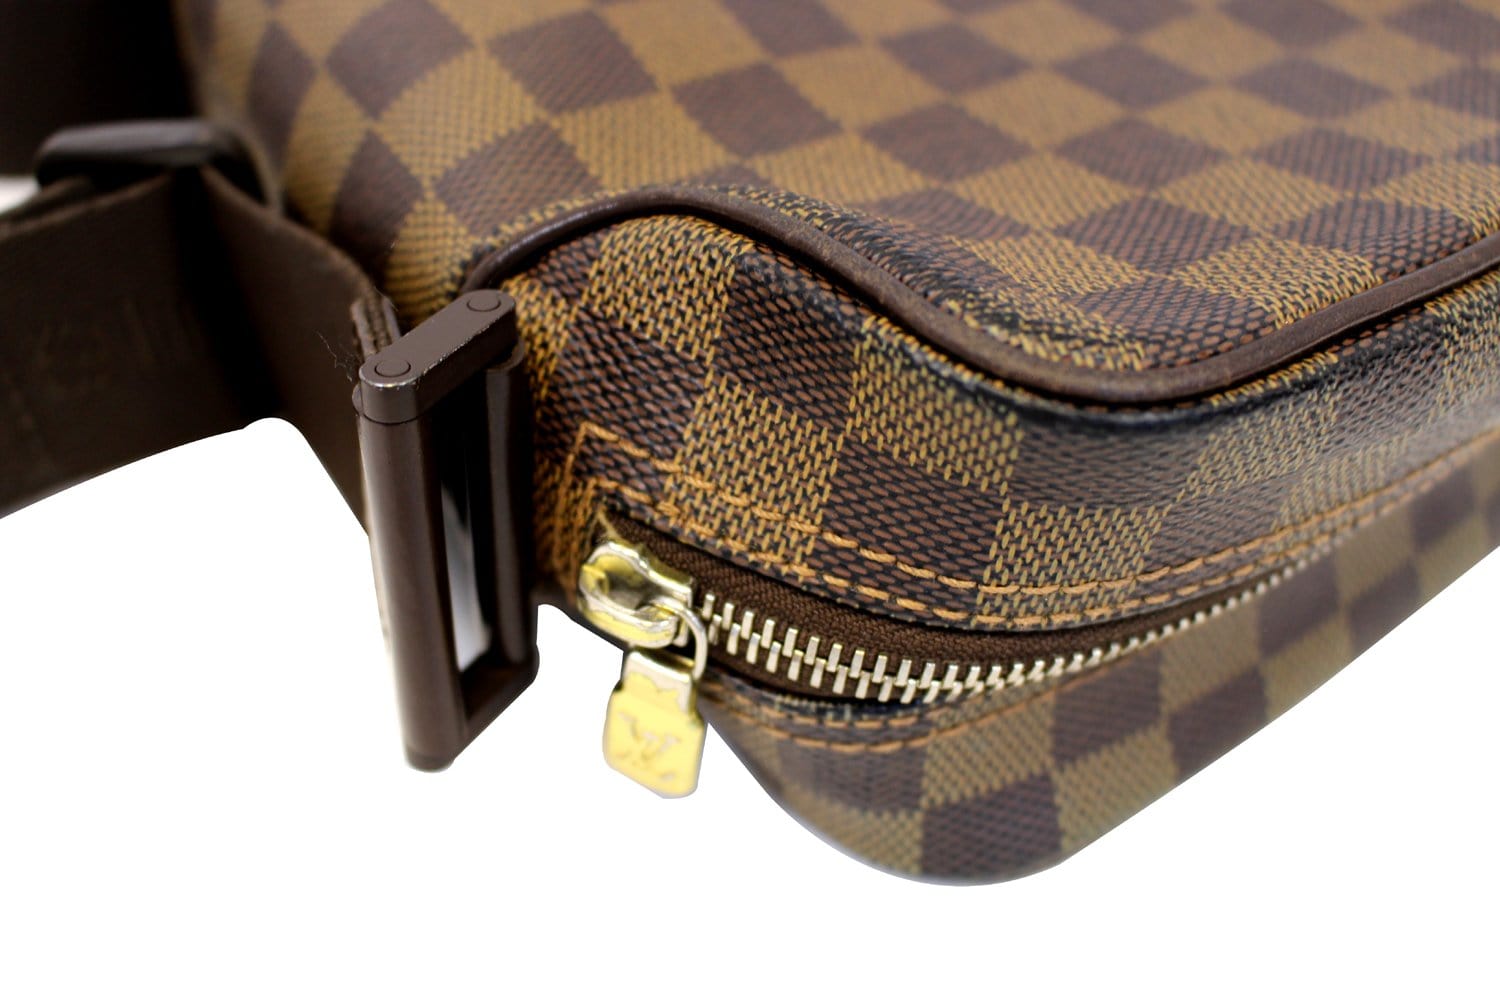 Louis Vuitton Olav Shoulder bag 340371